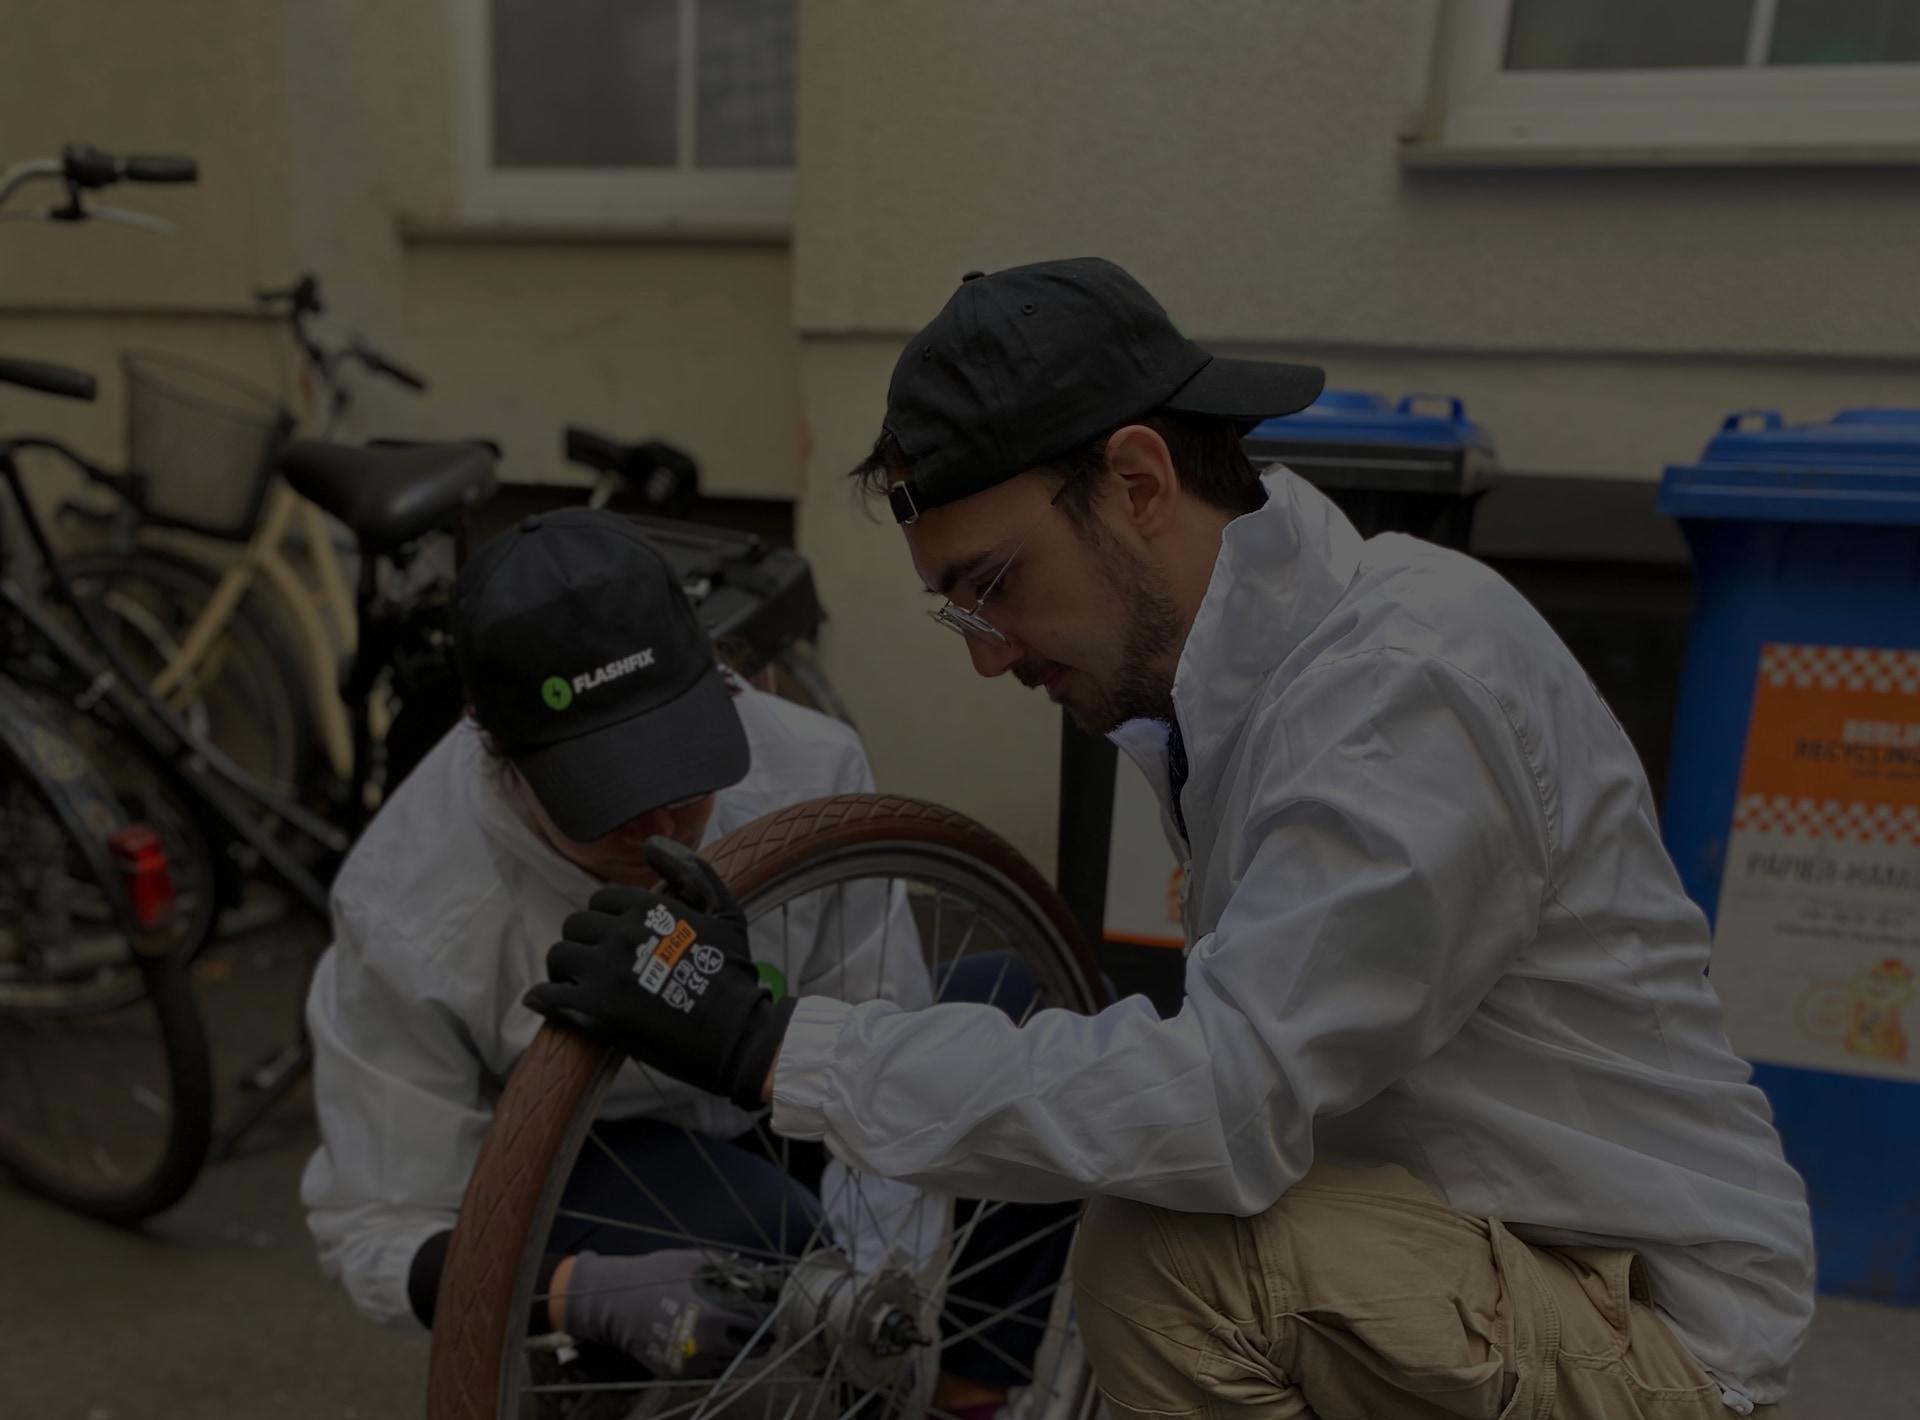 A mechanic performing a bike service.